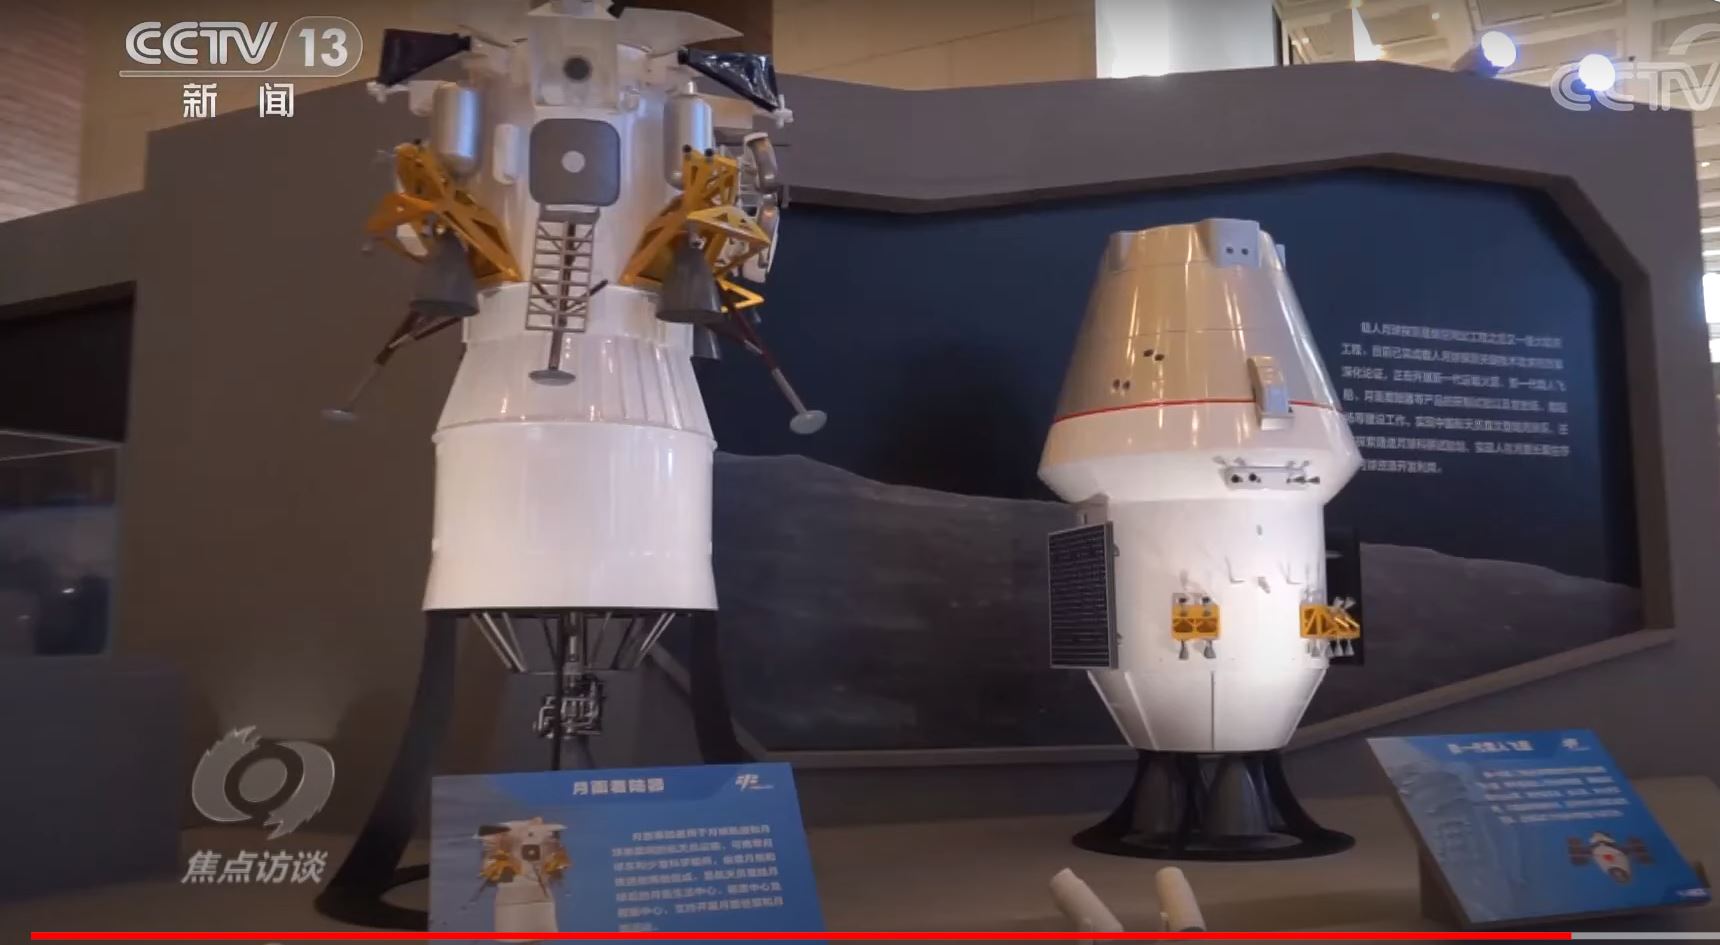 china s crewed moon landing program looks mighty impressive nasa says bring it on 211105 1